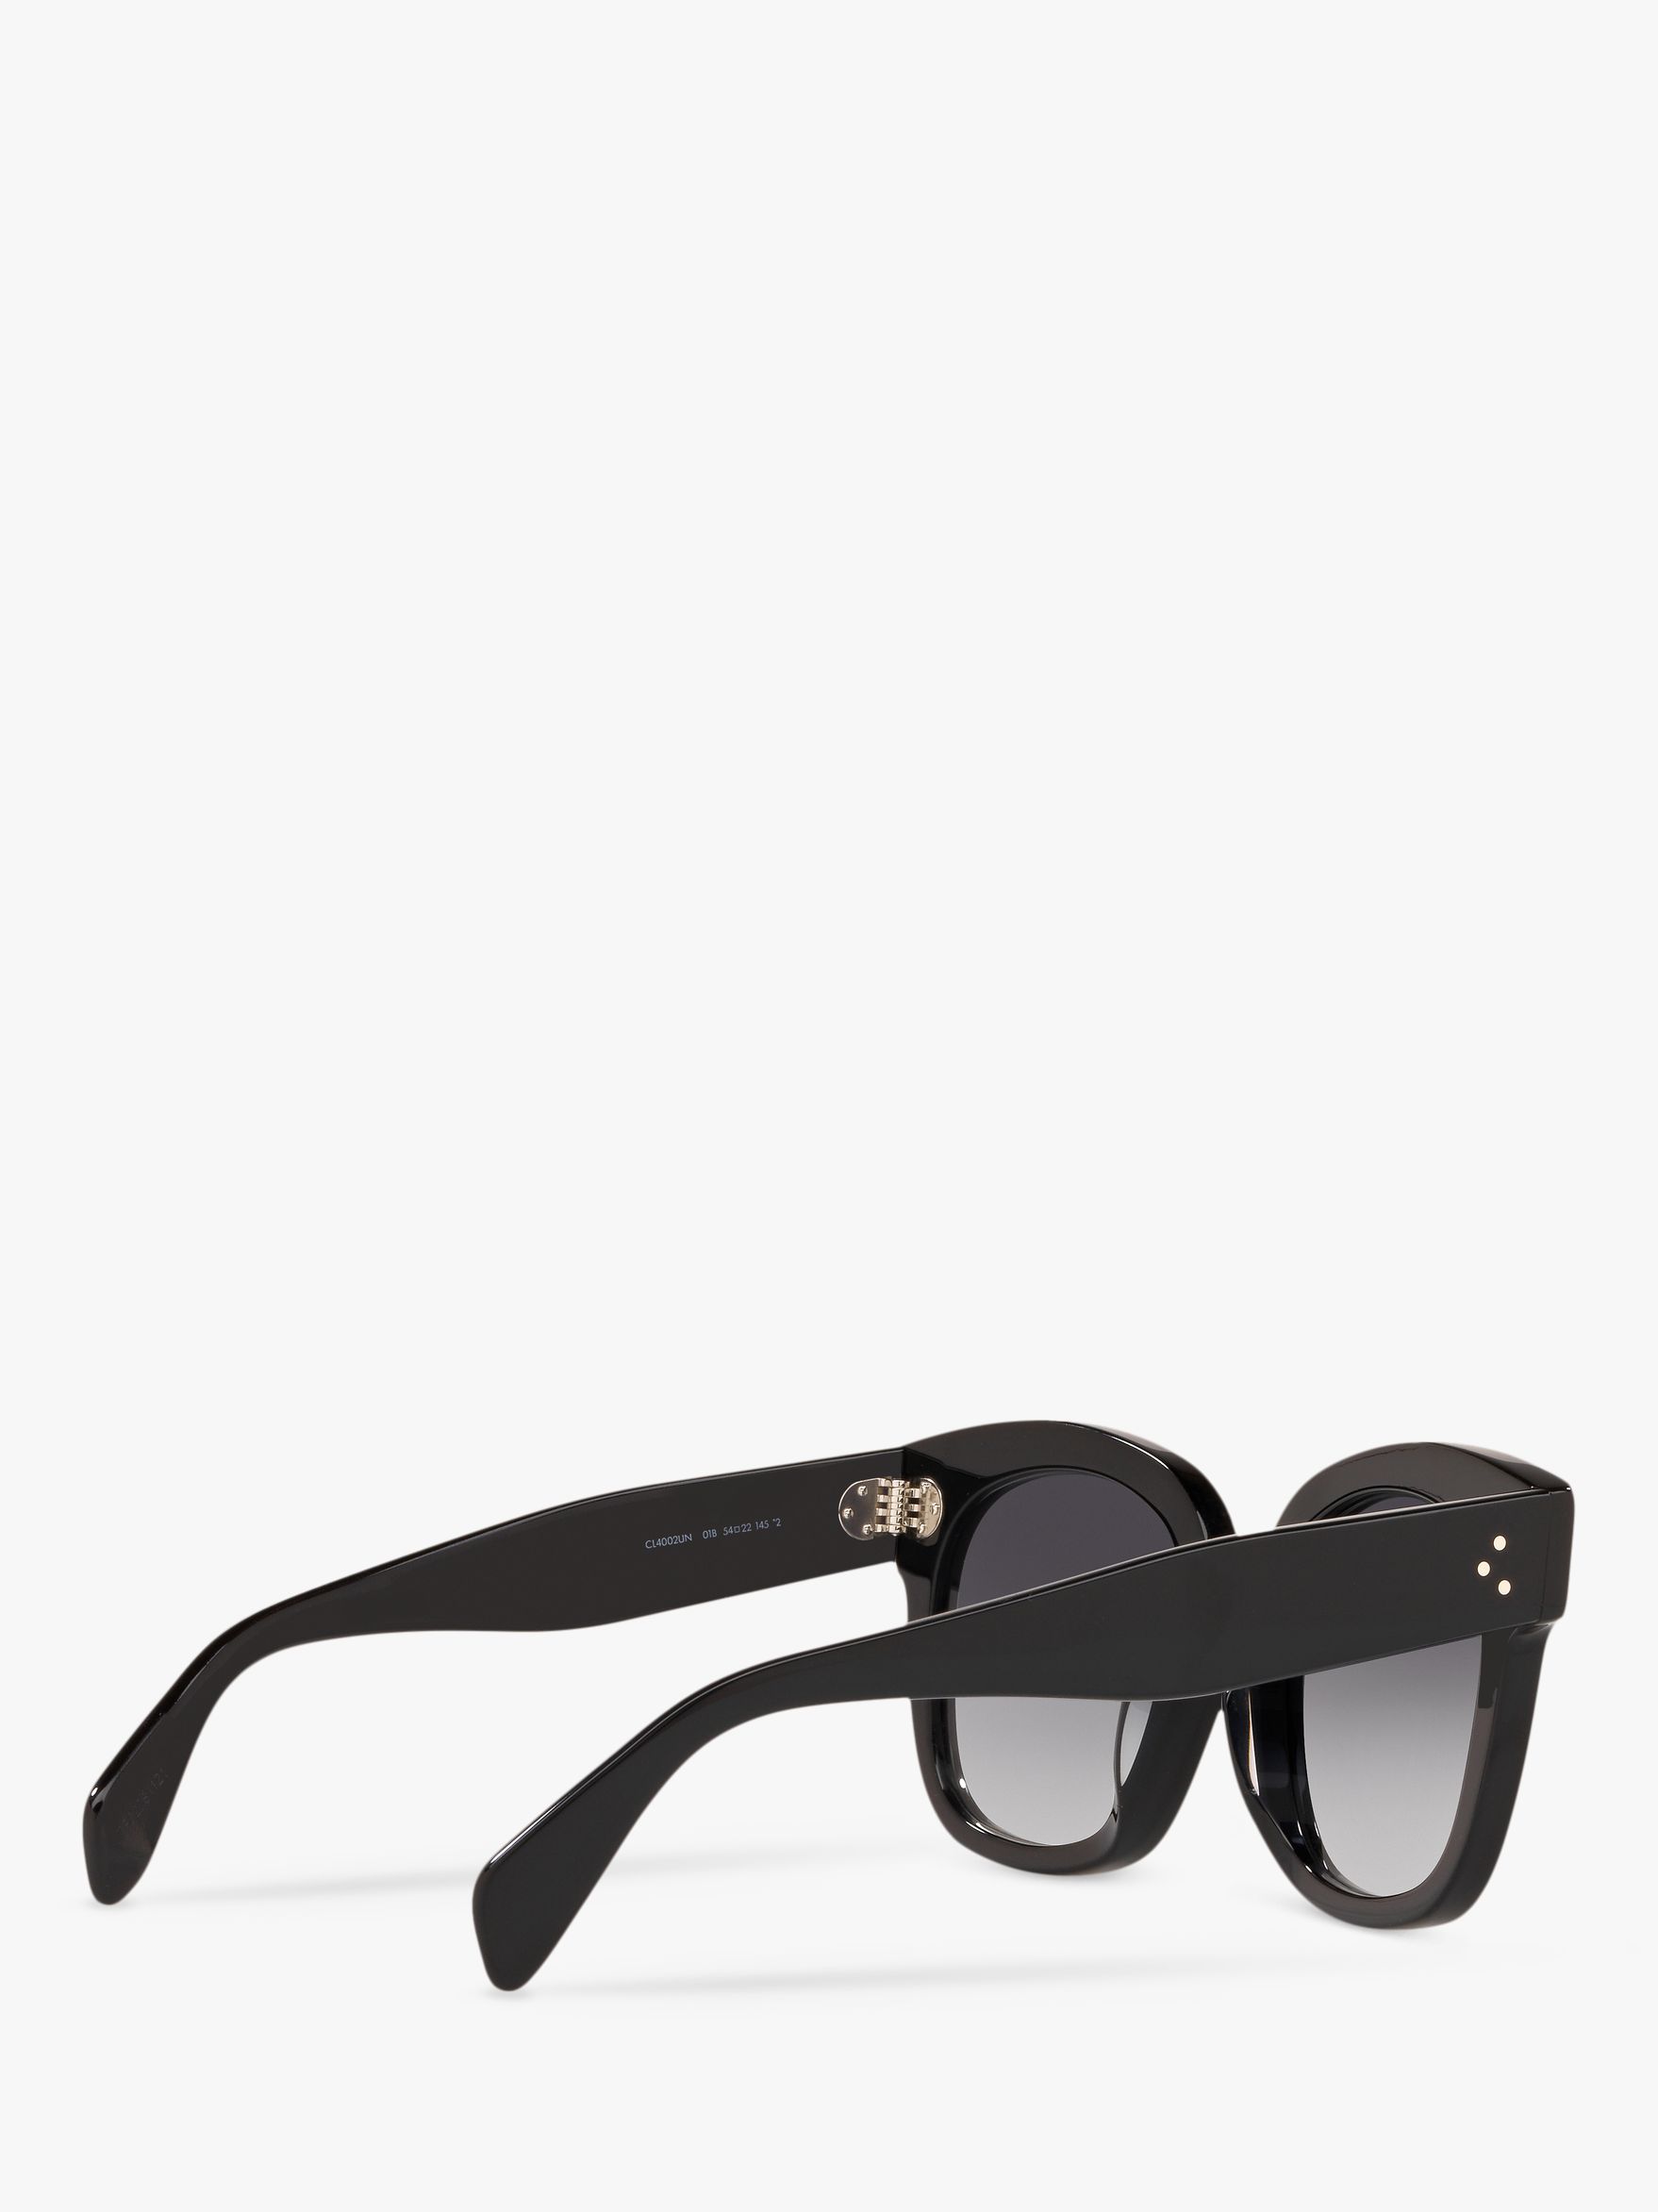 Buy Celine CL4002UN Women's Rectangular Sunglasses Online at johnlewis.com